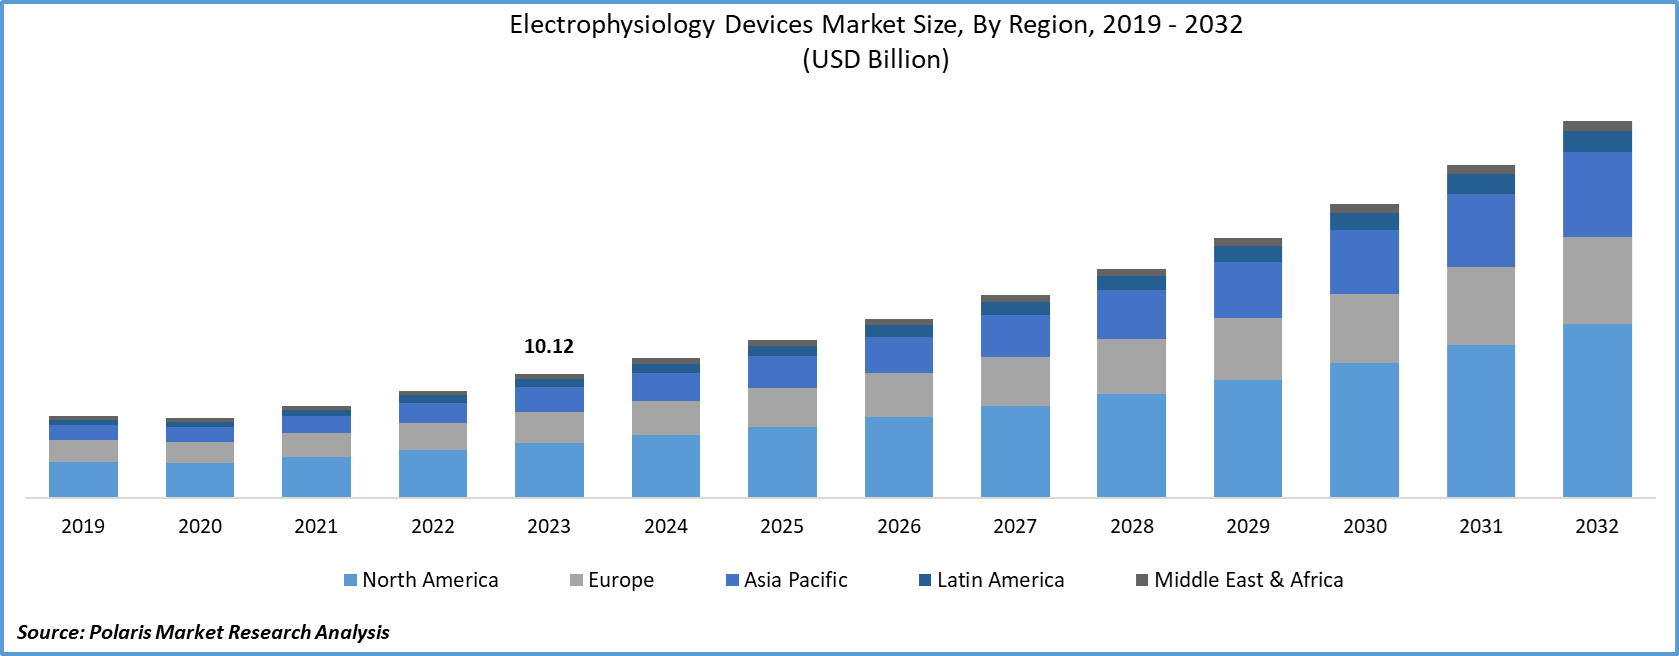 Electrophysiology Devices Market Size